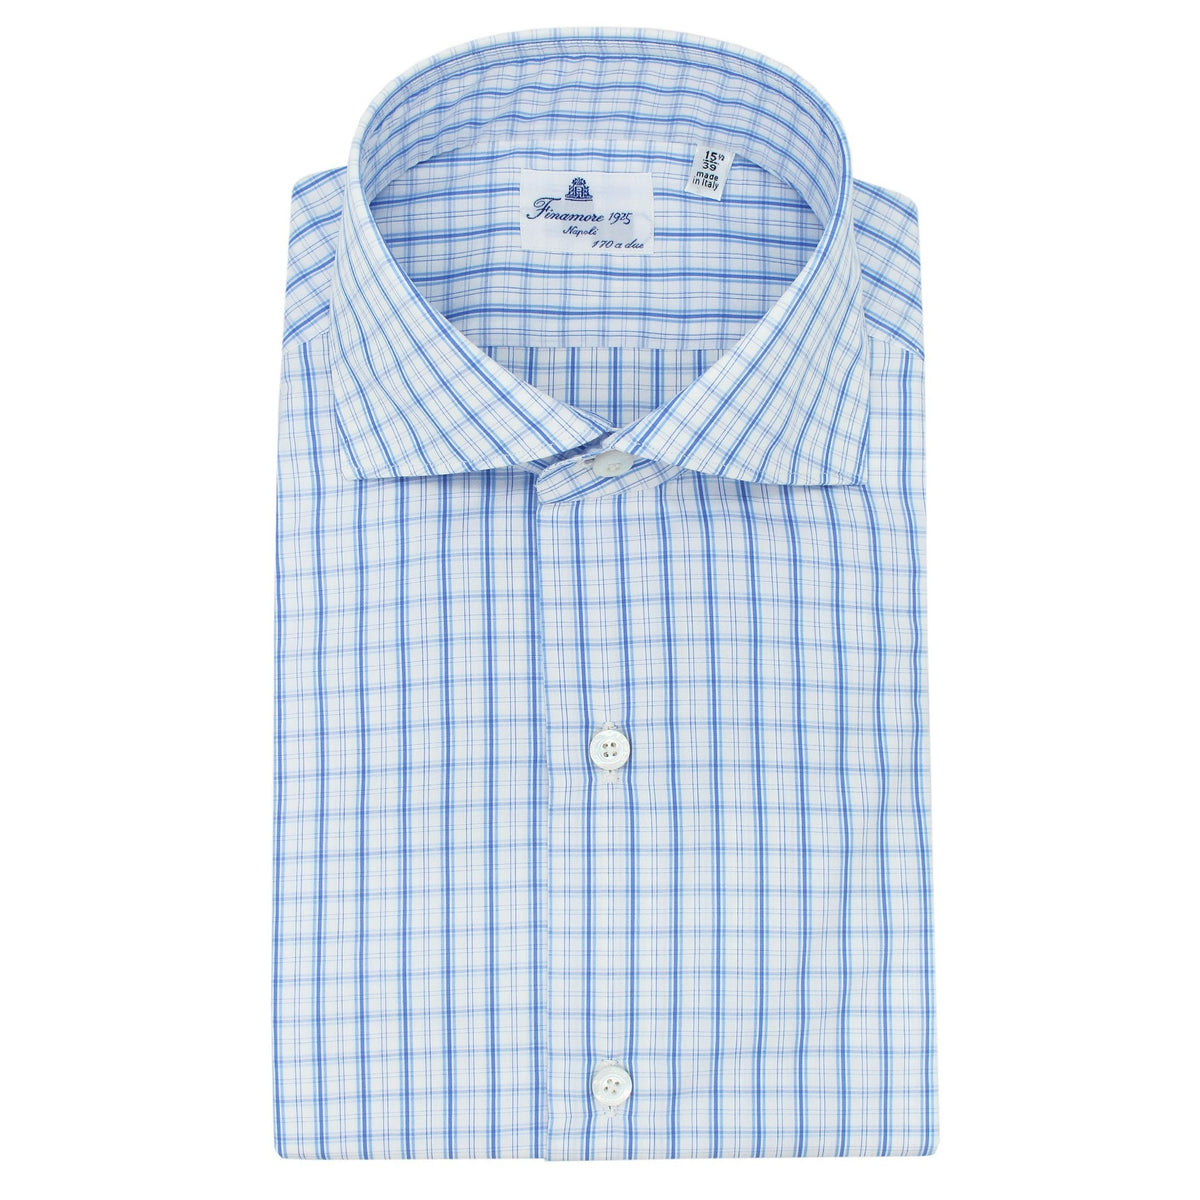 Classic slim fit shirt Milano cotton Giza 45 170 a due